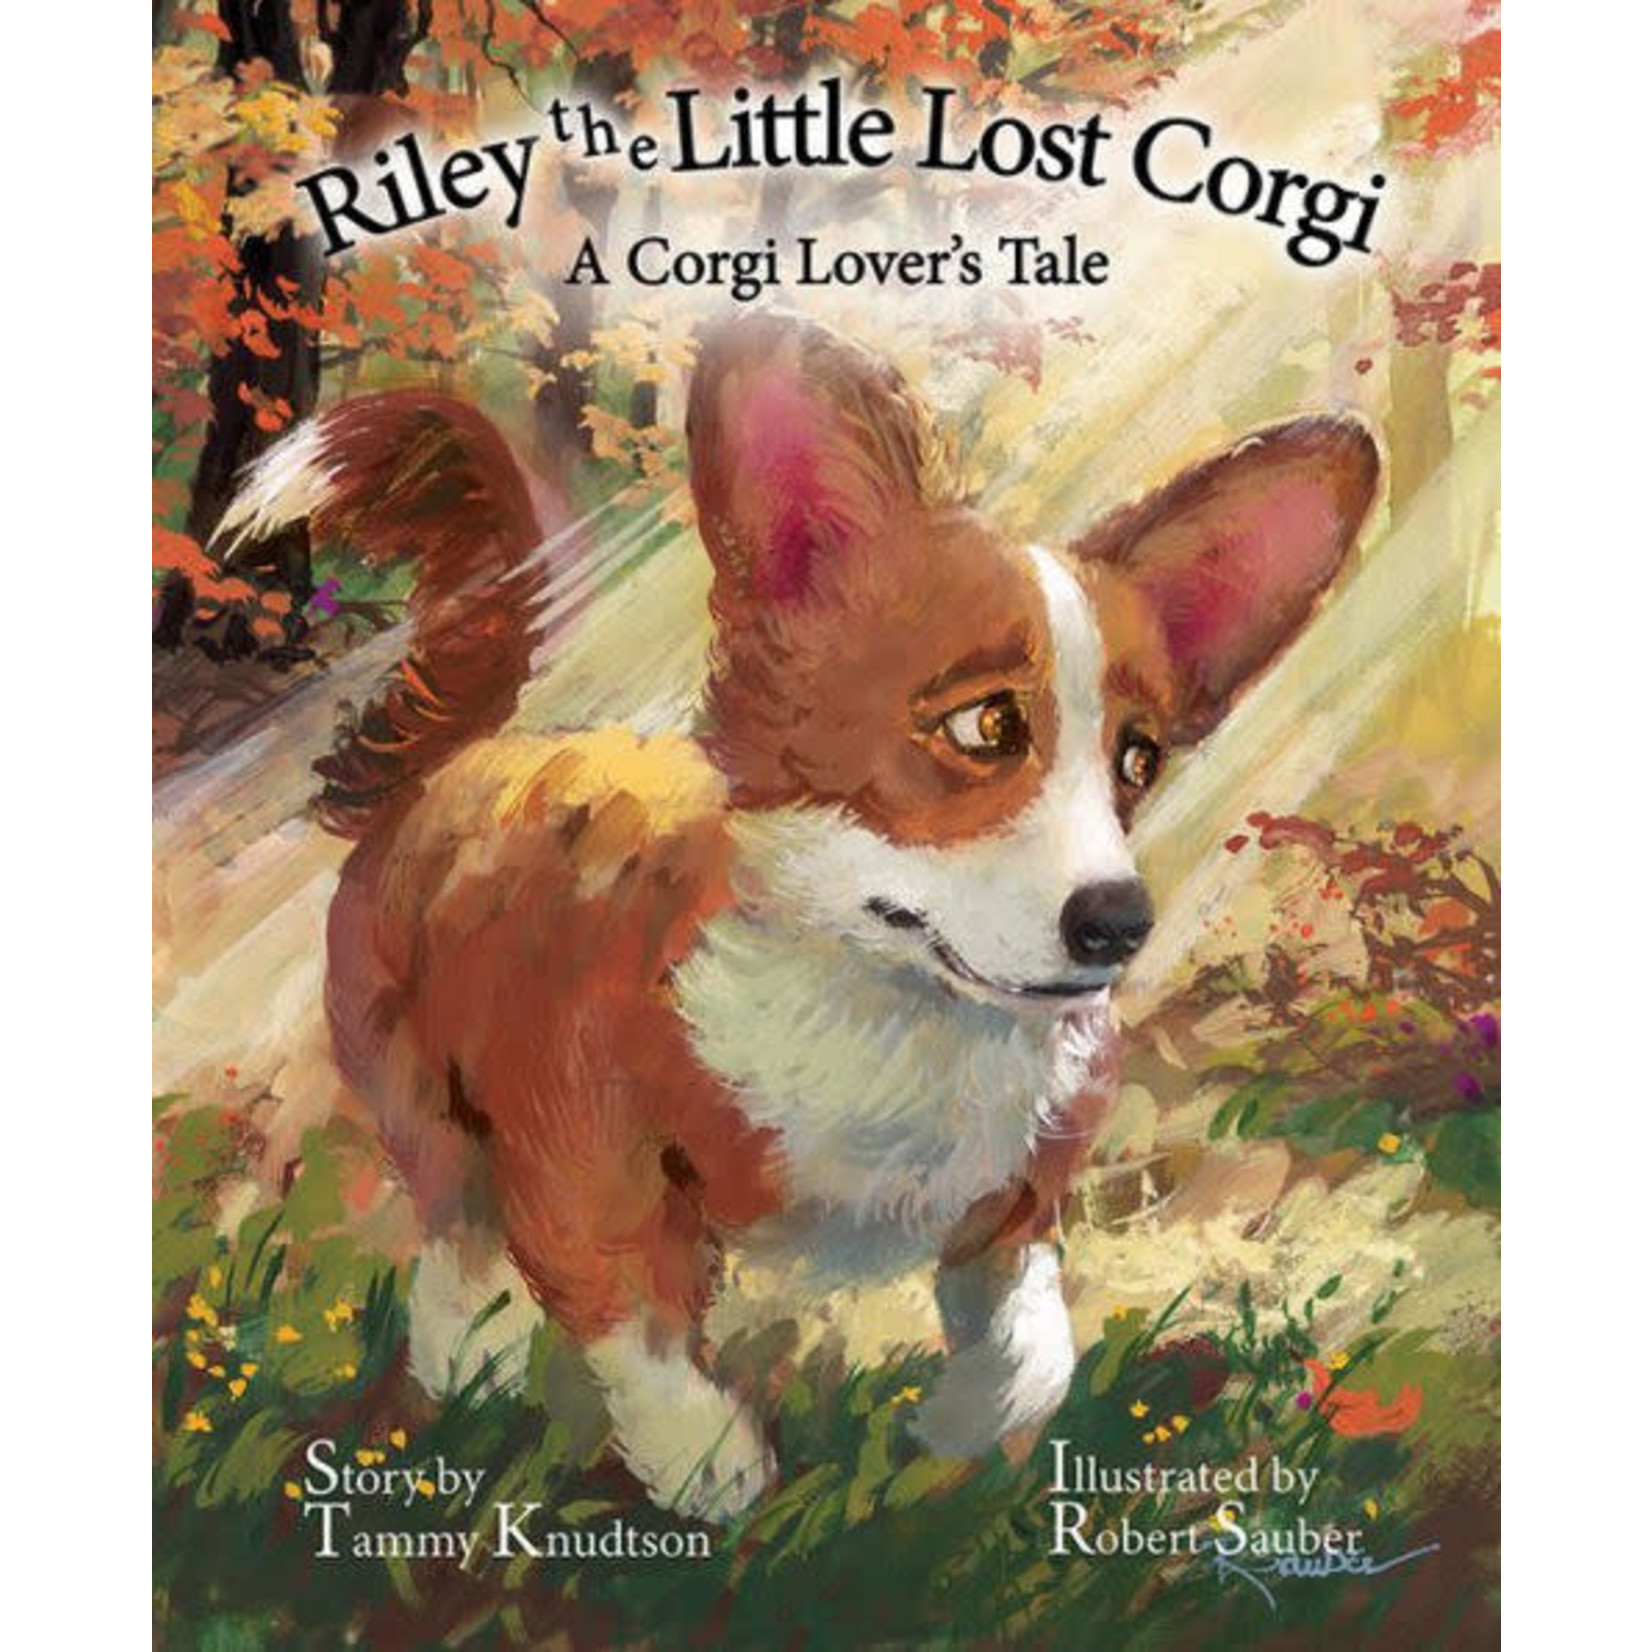 Riley the Little Lost Corgi by Tammy Knudson